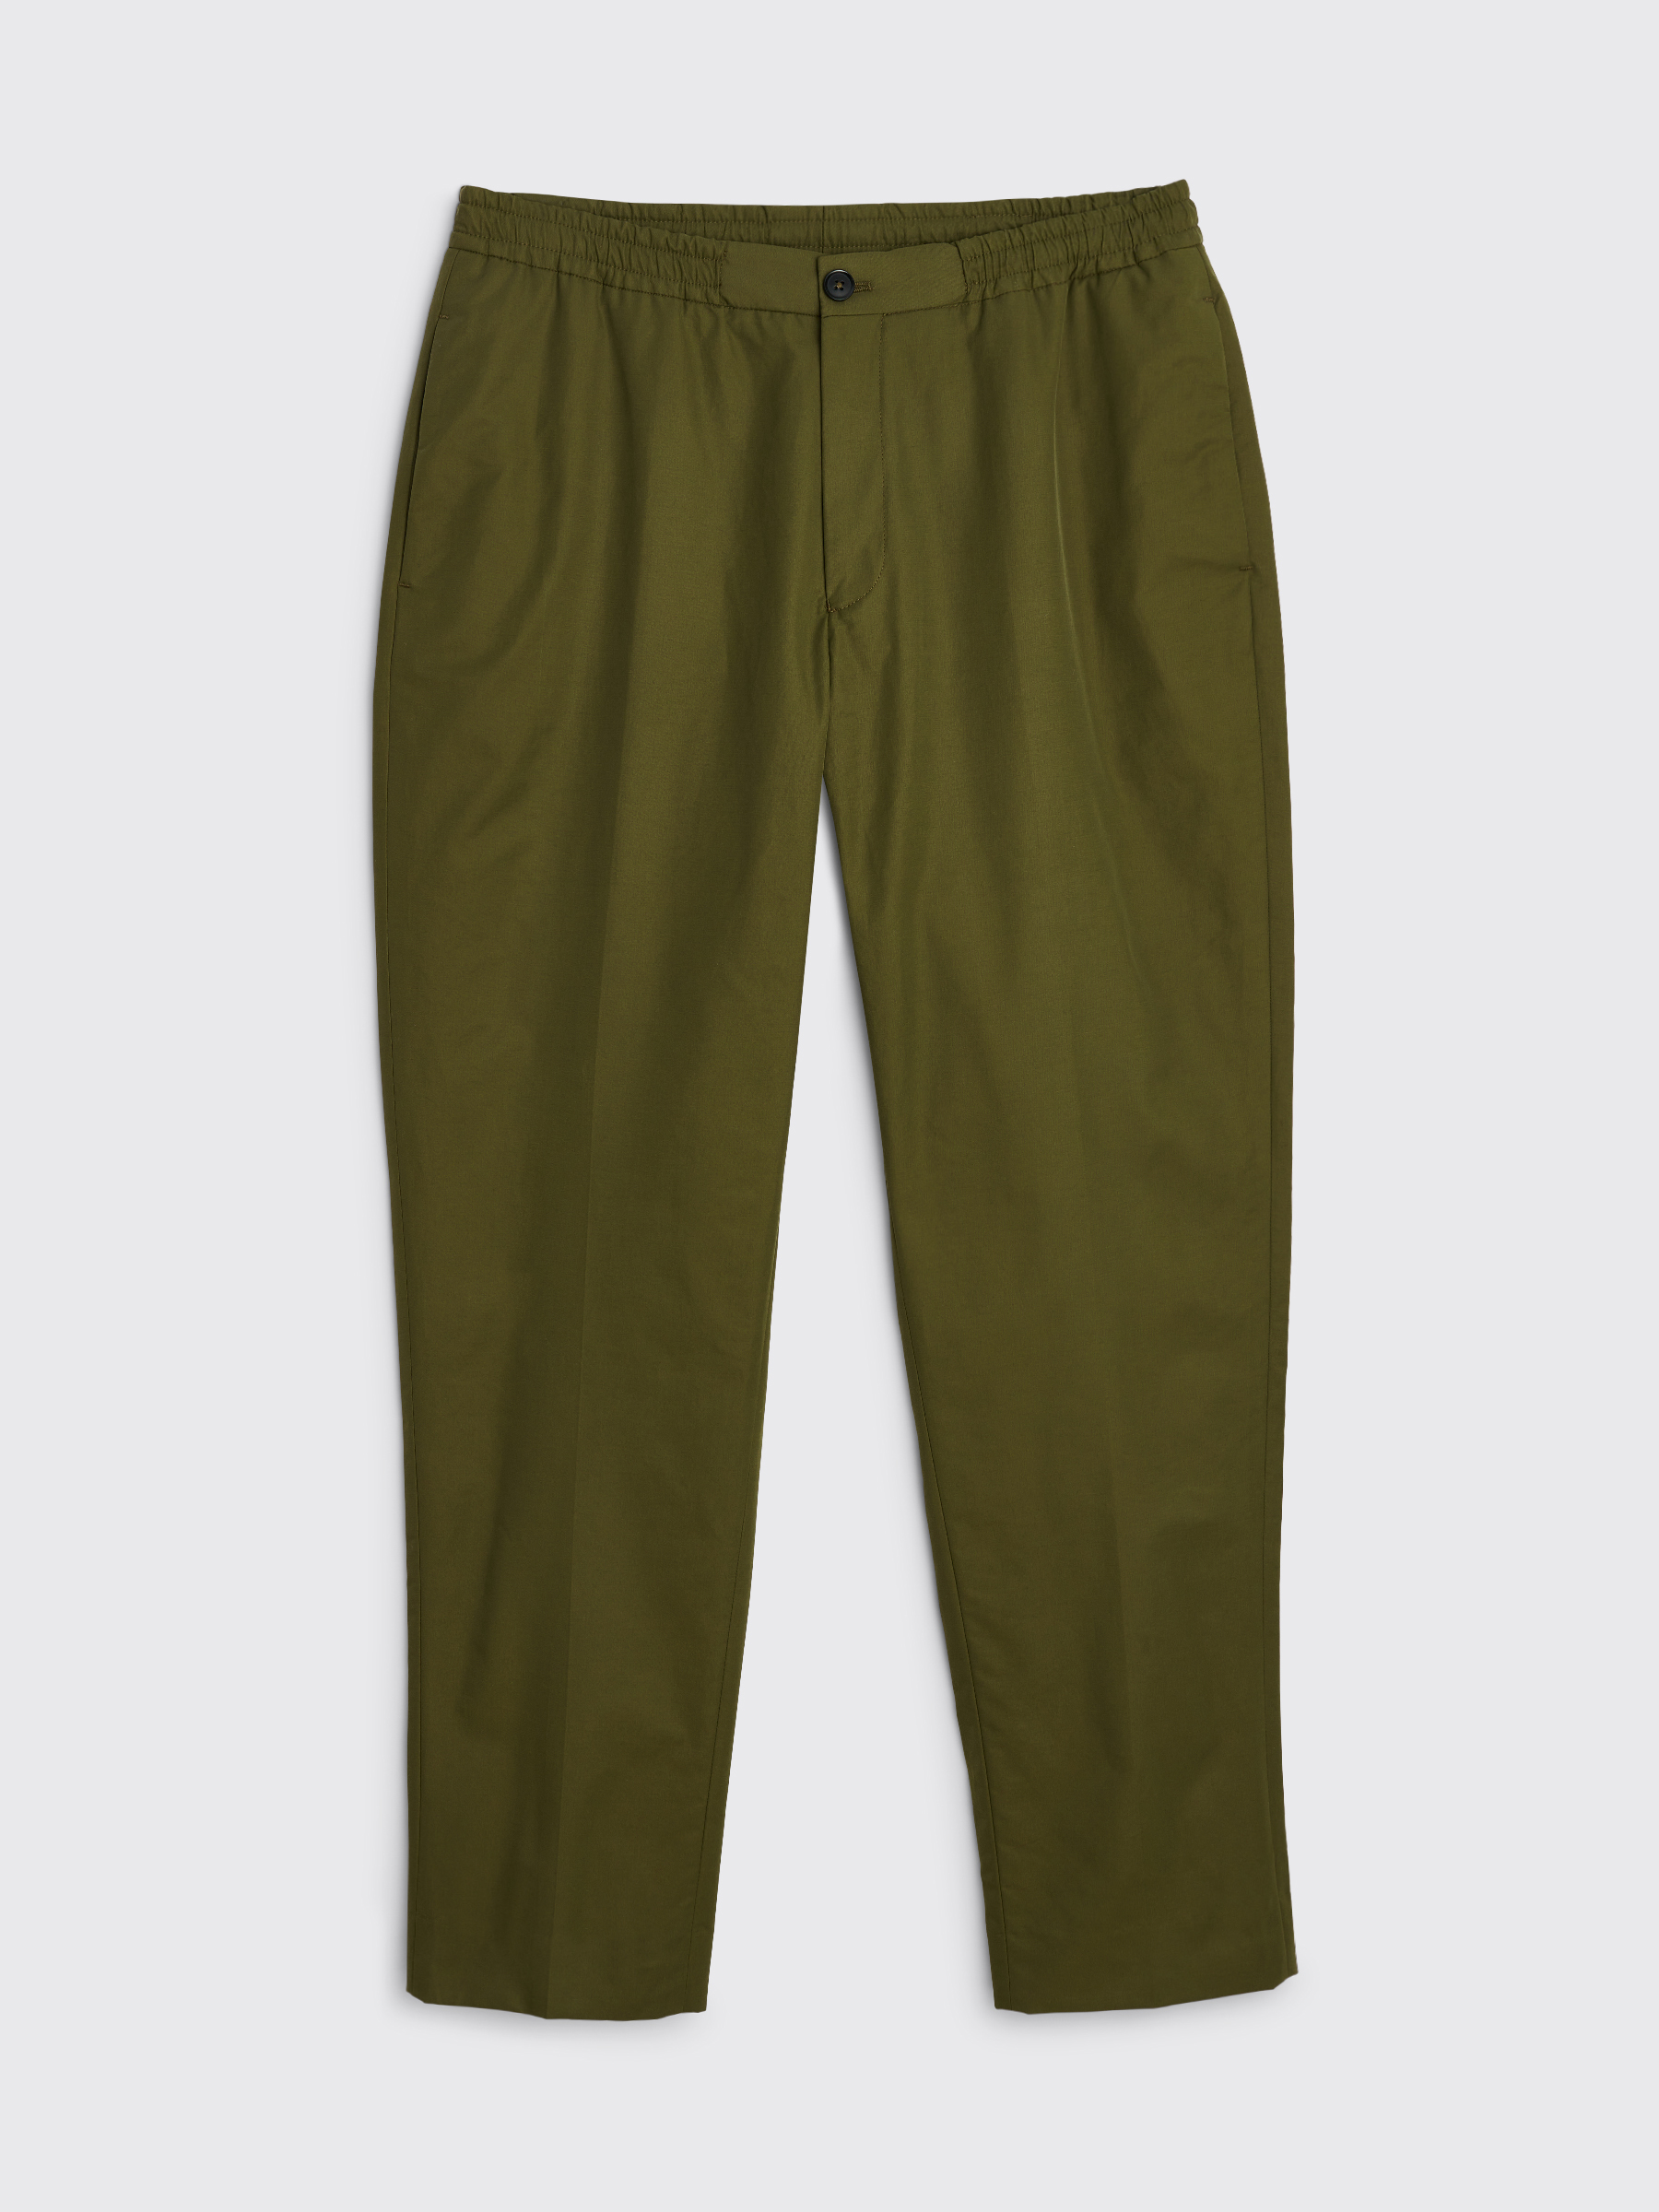 Très Bien - TRÈS BIEN Green Drawstring Pants Sport everywear